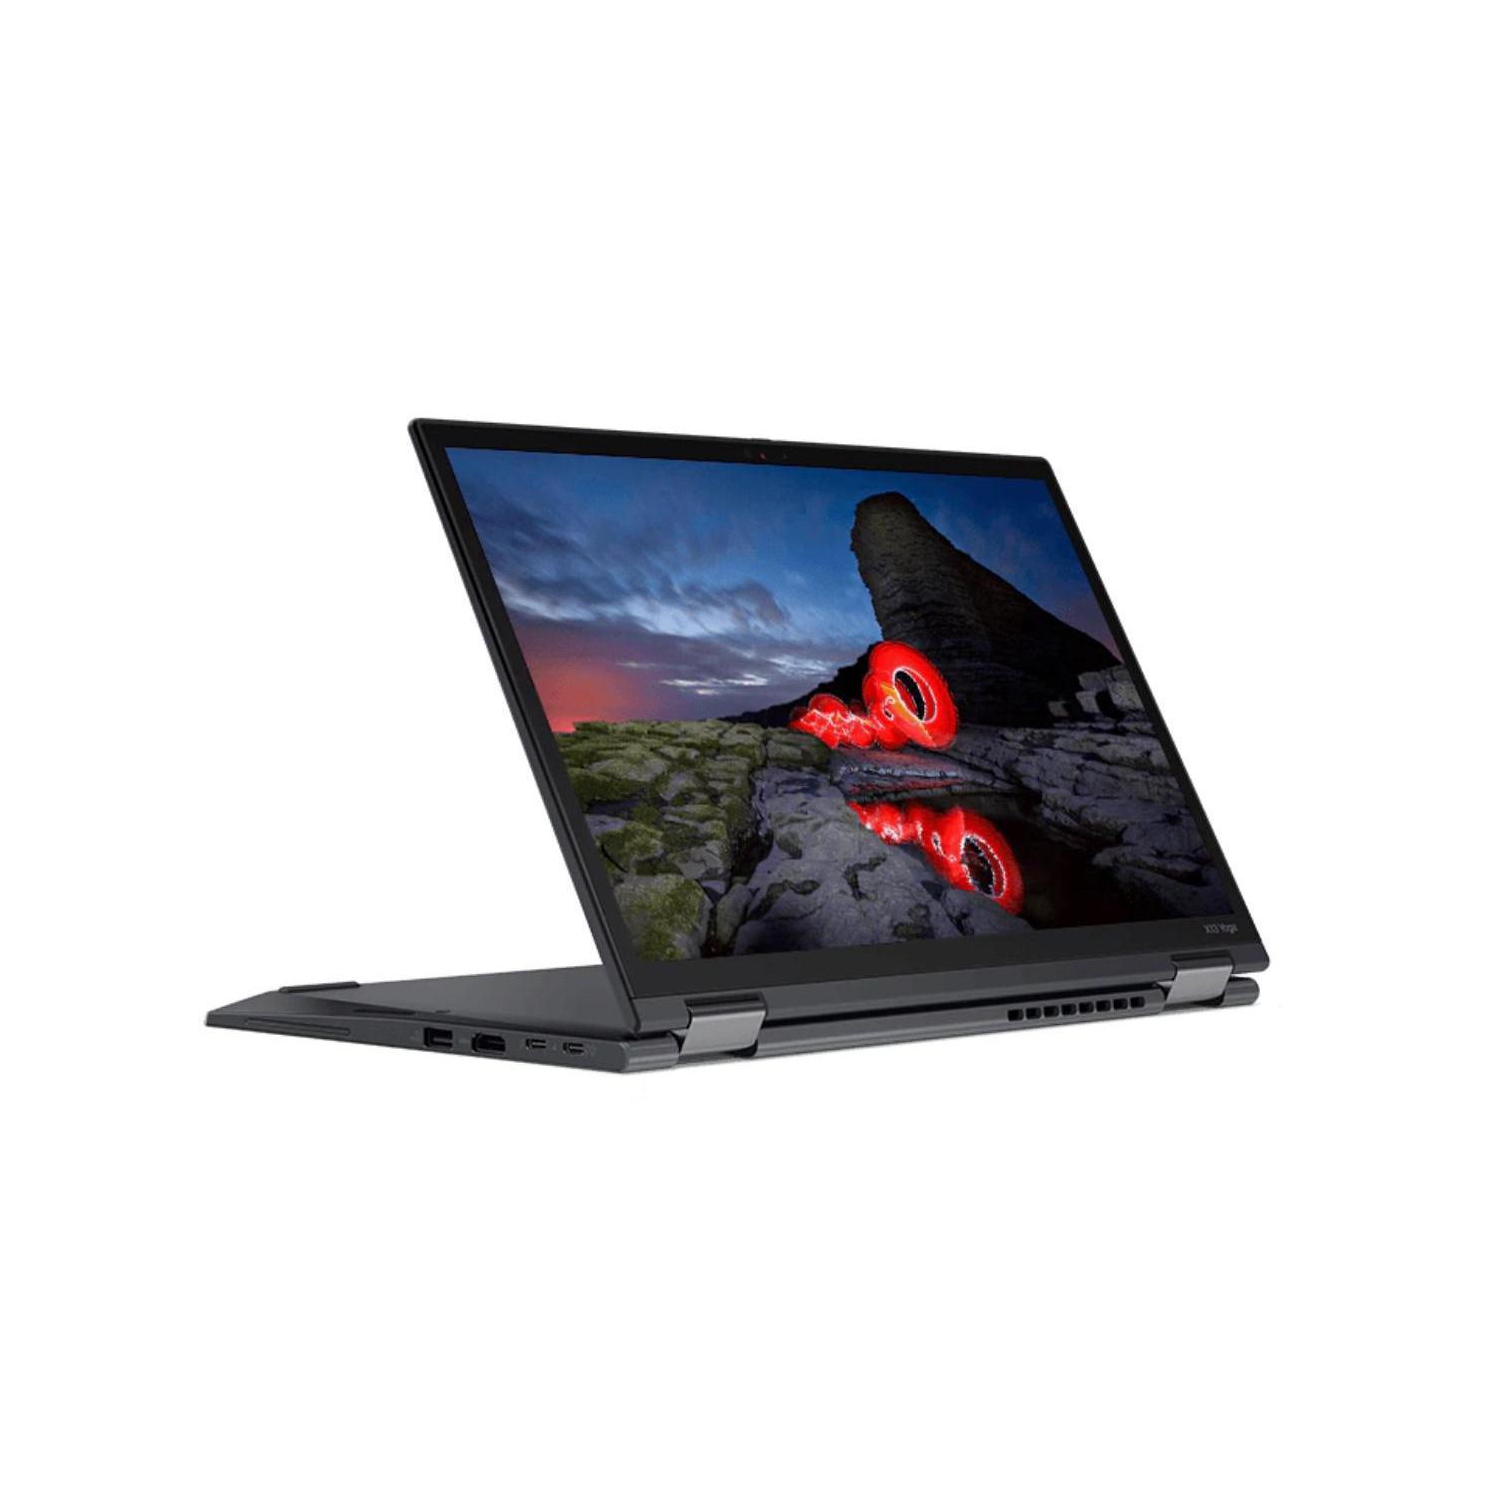 Brand New - Lenovo X13 Yoga Gen. 2 (ThinkPad), 2 in 1, Business Laptop, Intel Core i7 11th Gen. vPro, 13.3" WQXGA Touch, 32GB, 512GB PCIe, Backlit KBD, Fingerprint, Window 10 Pro